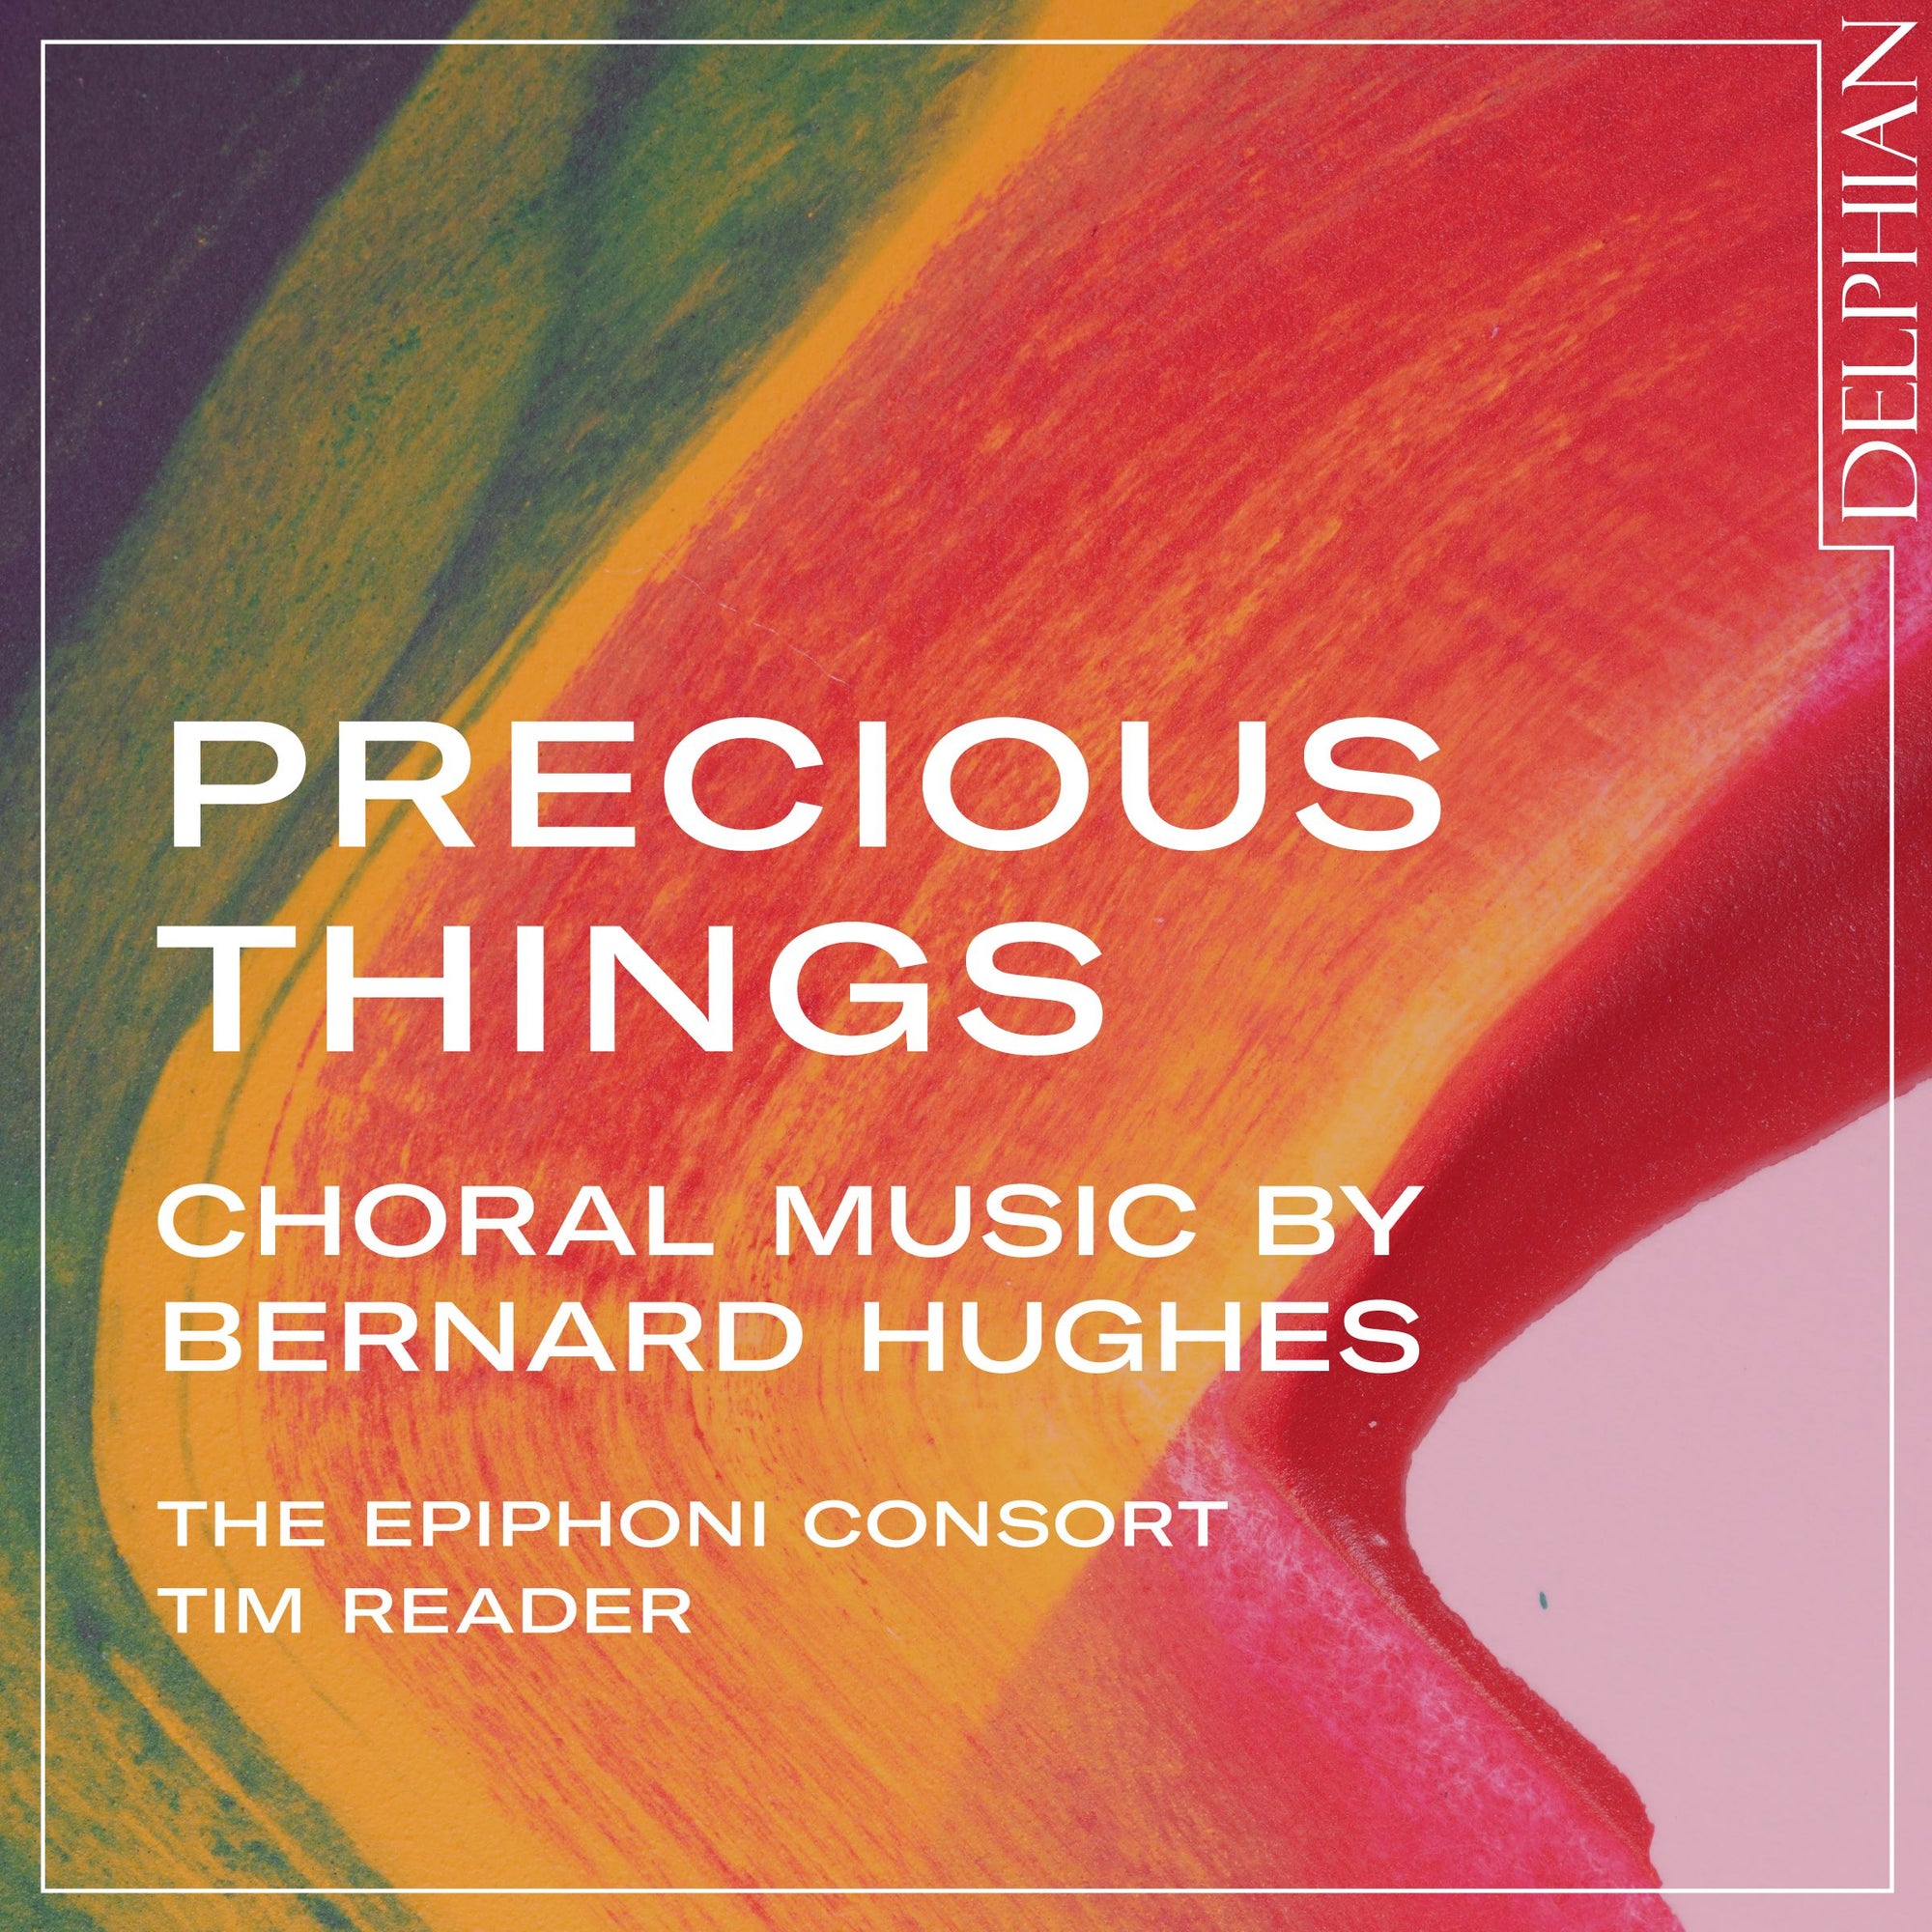 Precious Things: Choral Music by Bernard Hughes CD Delphian Records